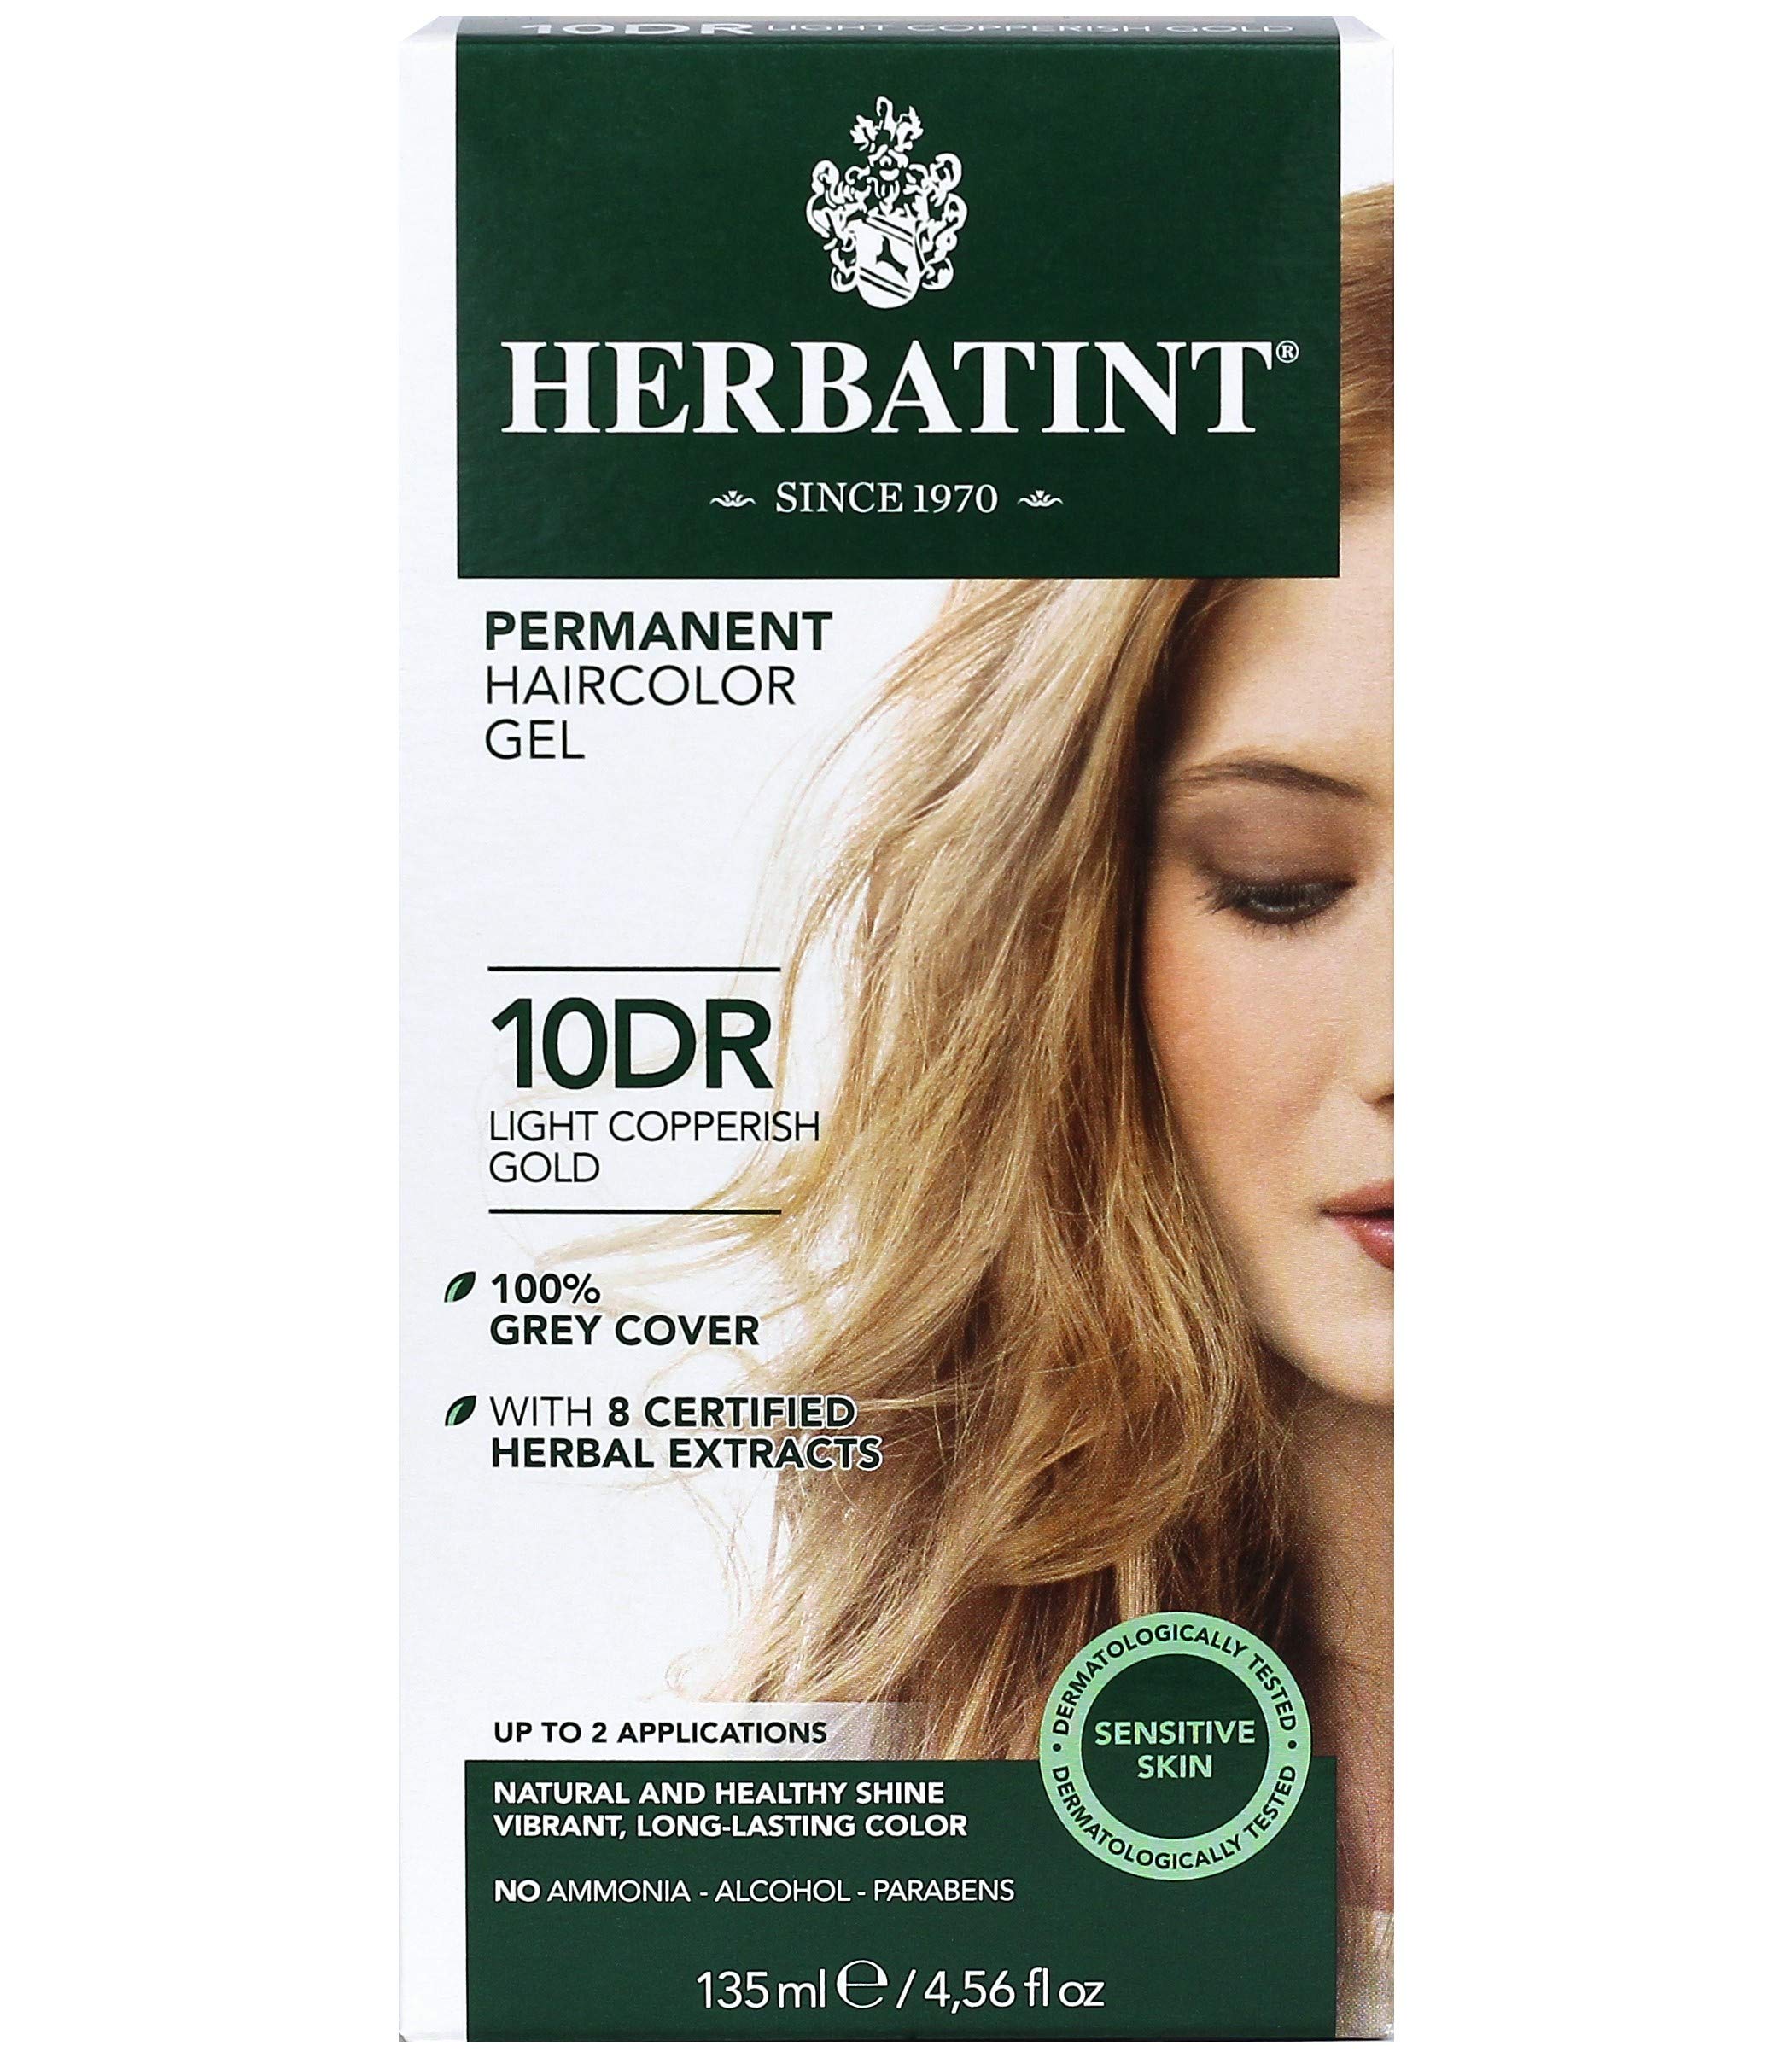 Herbatint Permanent Haircolor Gel, 10DR Light Copperish Gold, Alcohol Free, Vegan, 100% Grey Coverage - 4.56 oz